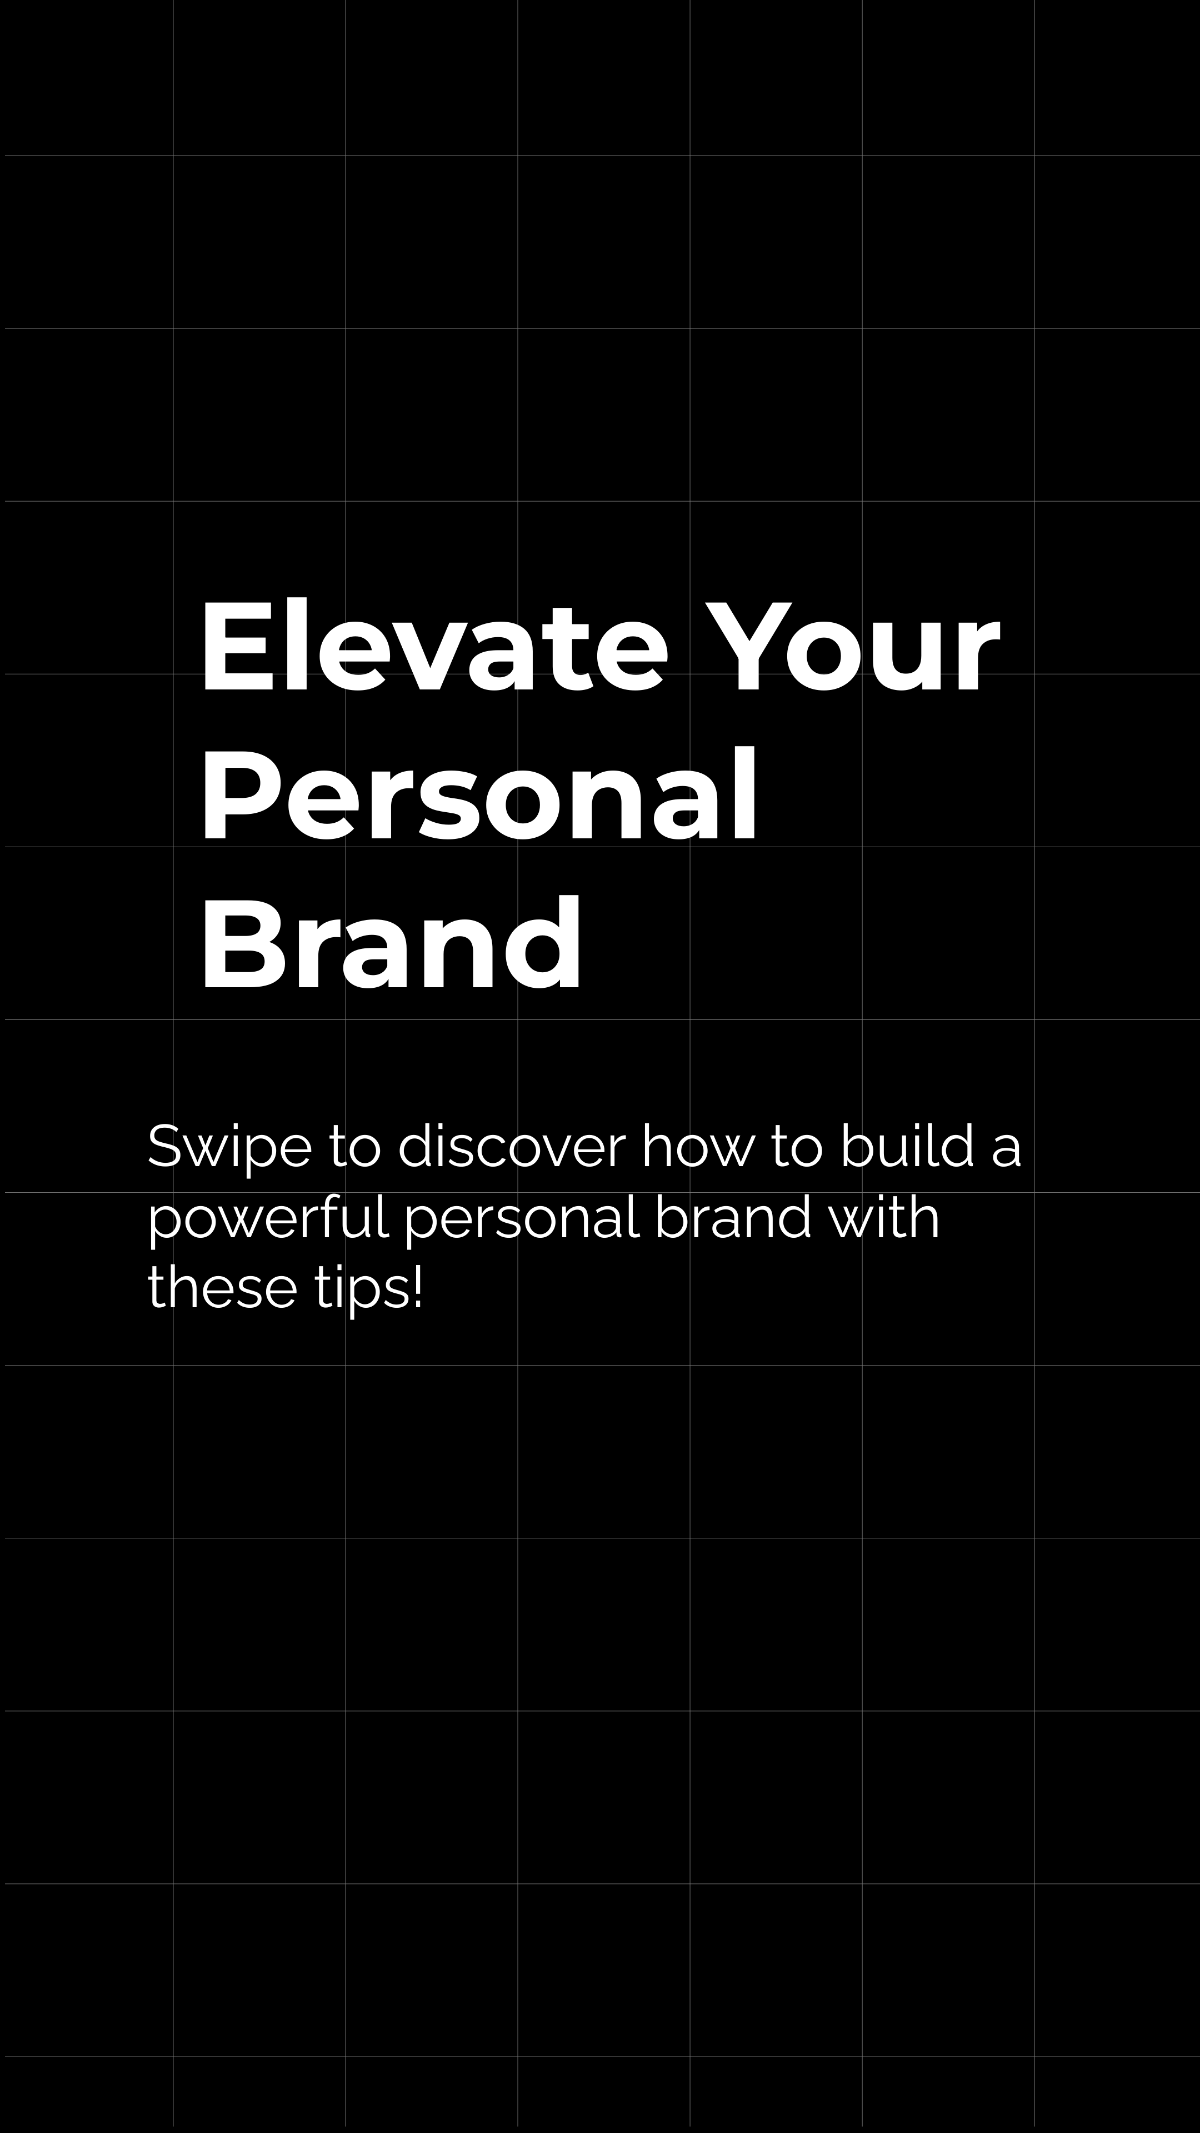 Personal Brand Carousel Tips Instagram Post